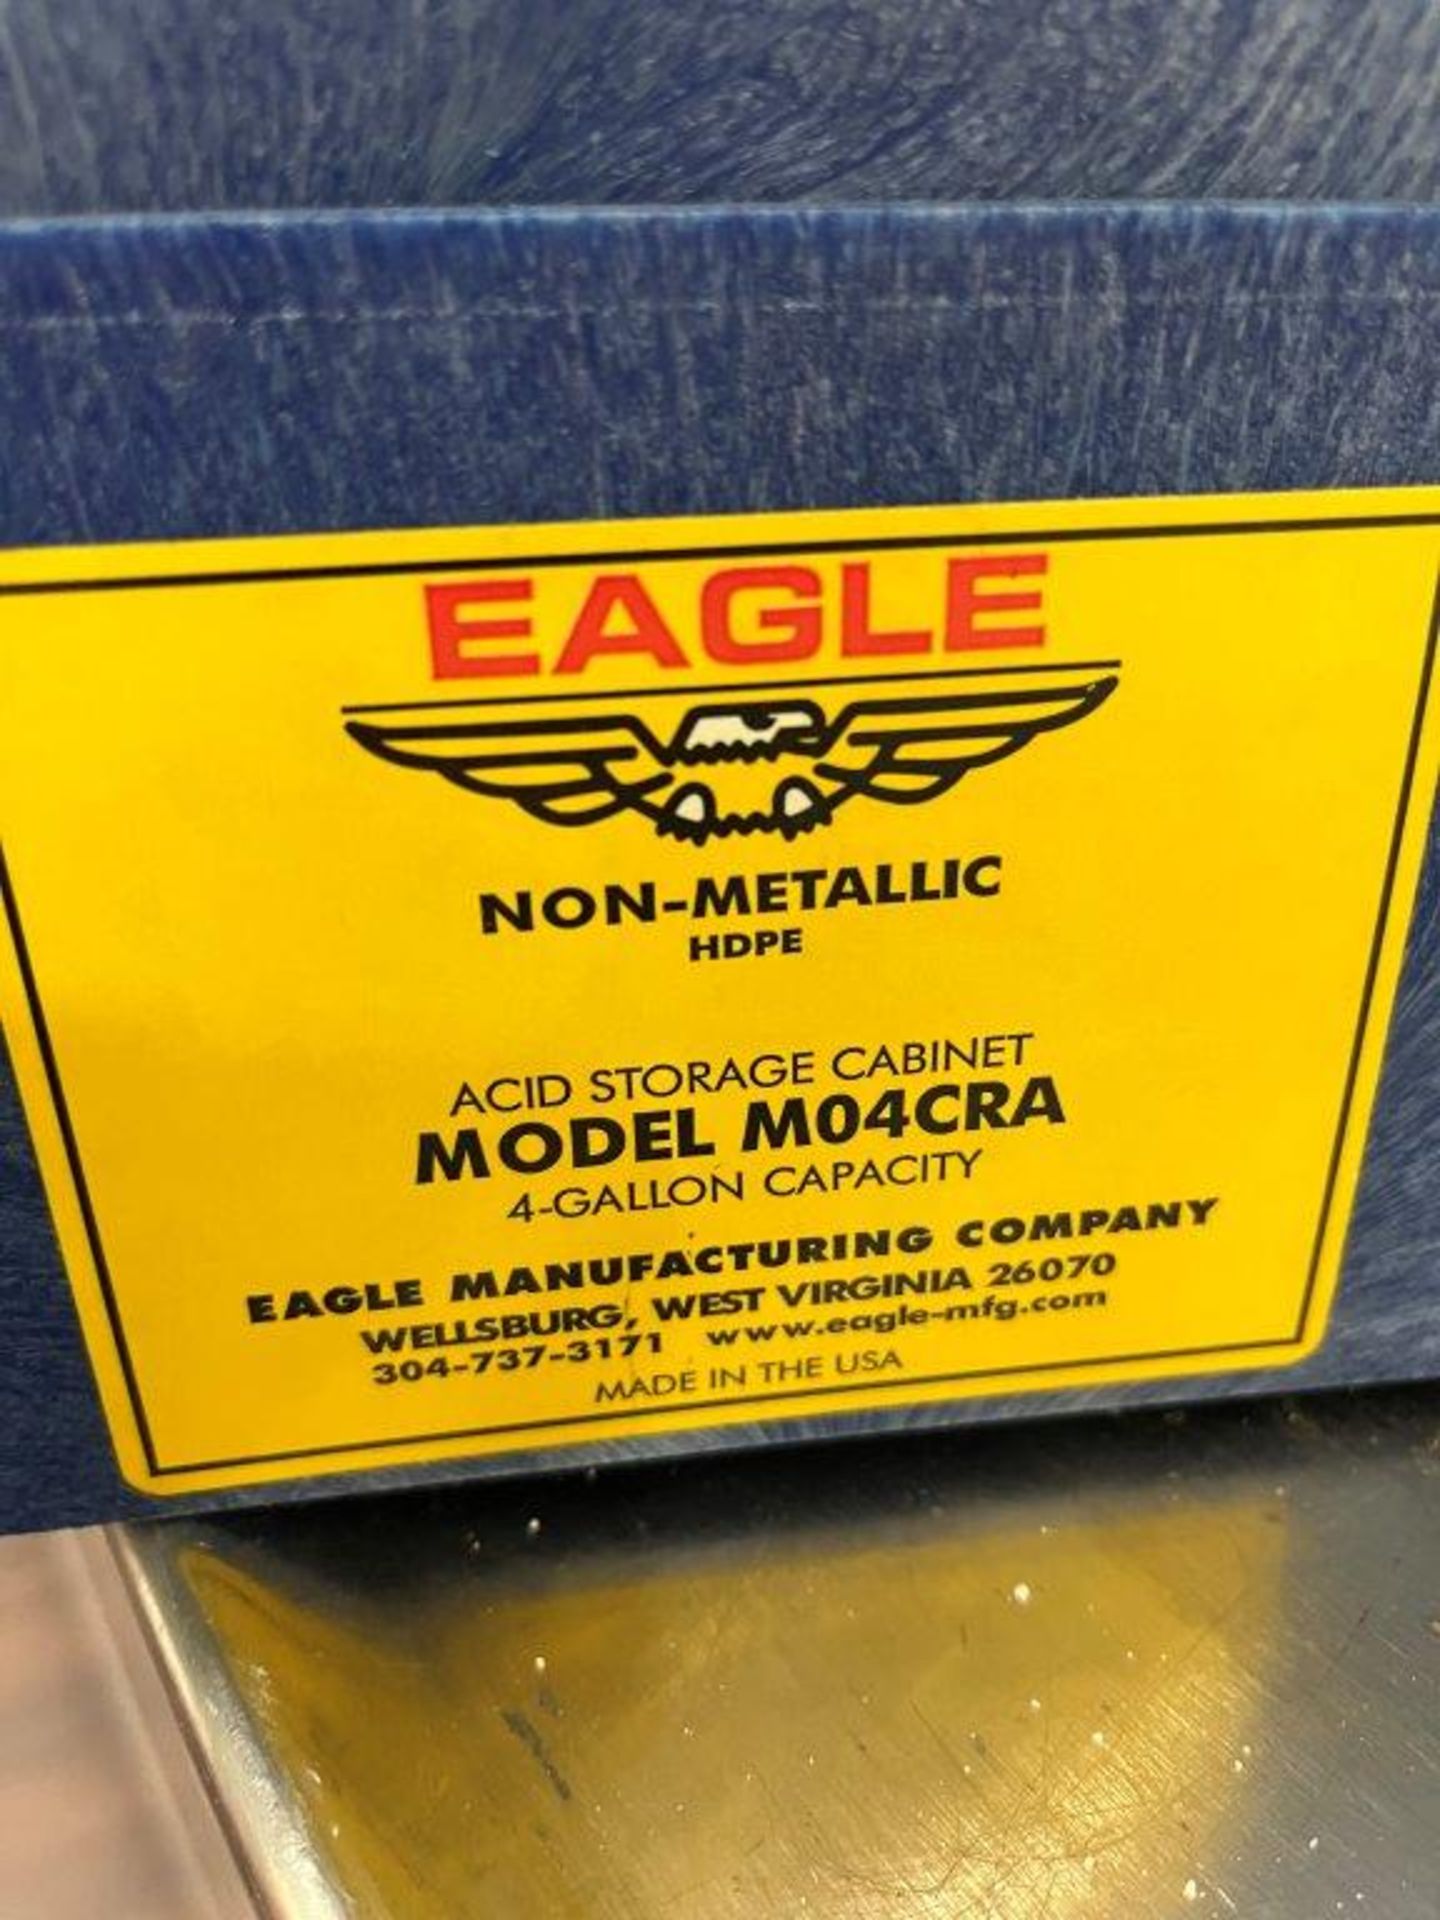 Eagle M04CRA 4-Gallon Capacity Acid Storage Cabinet - Image 2 of 2